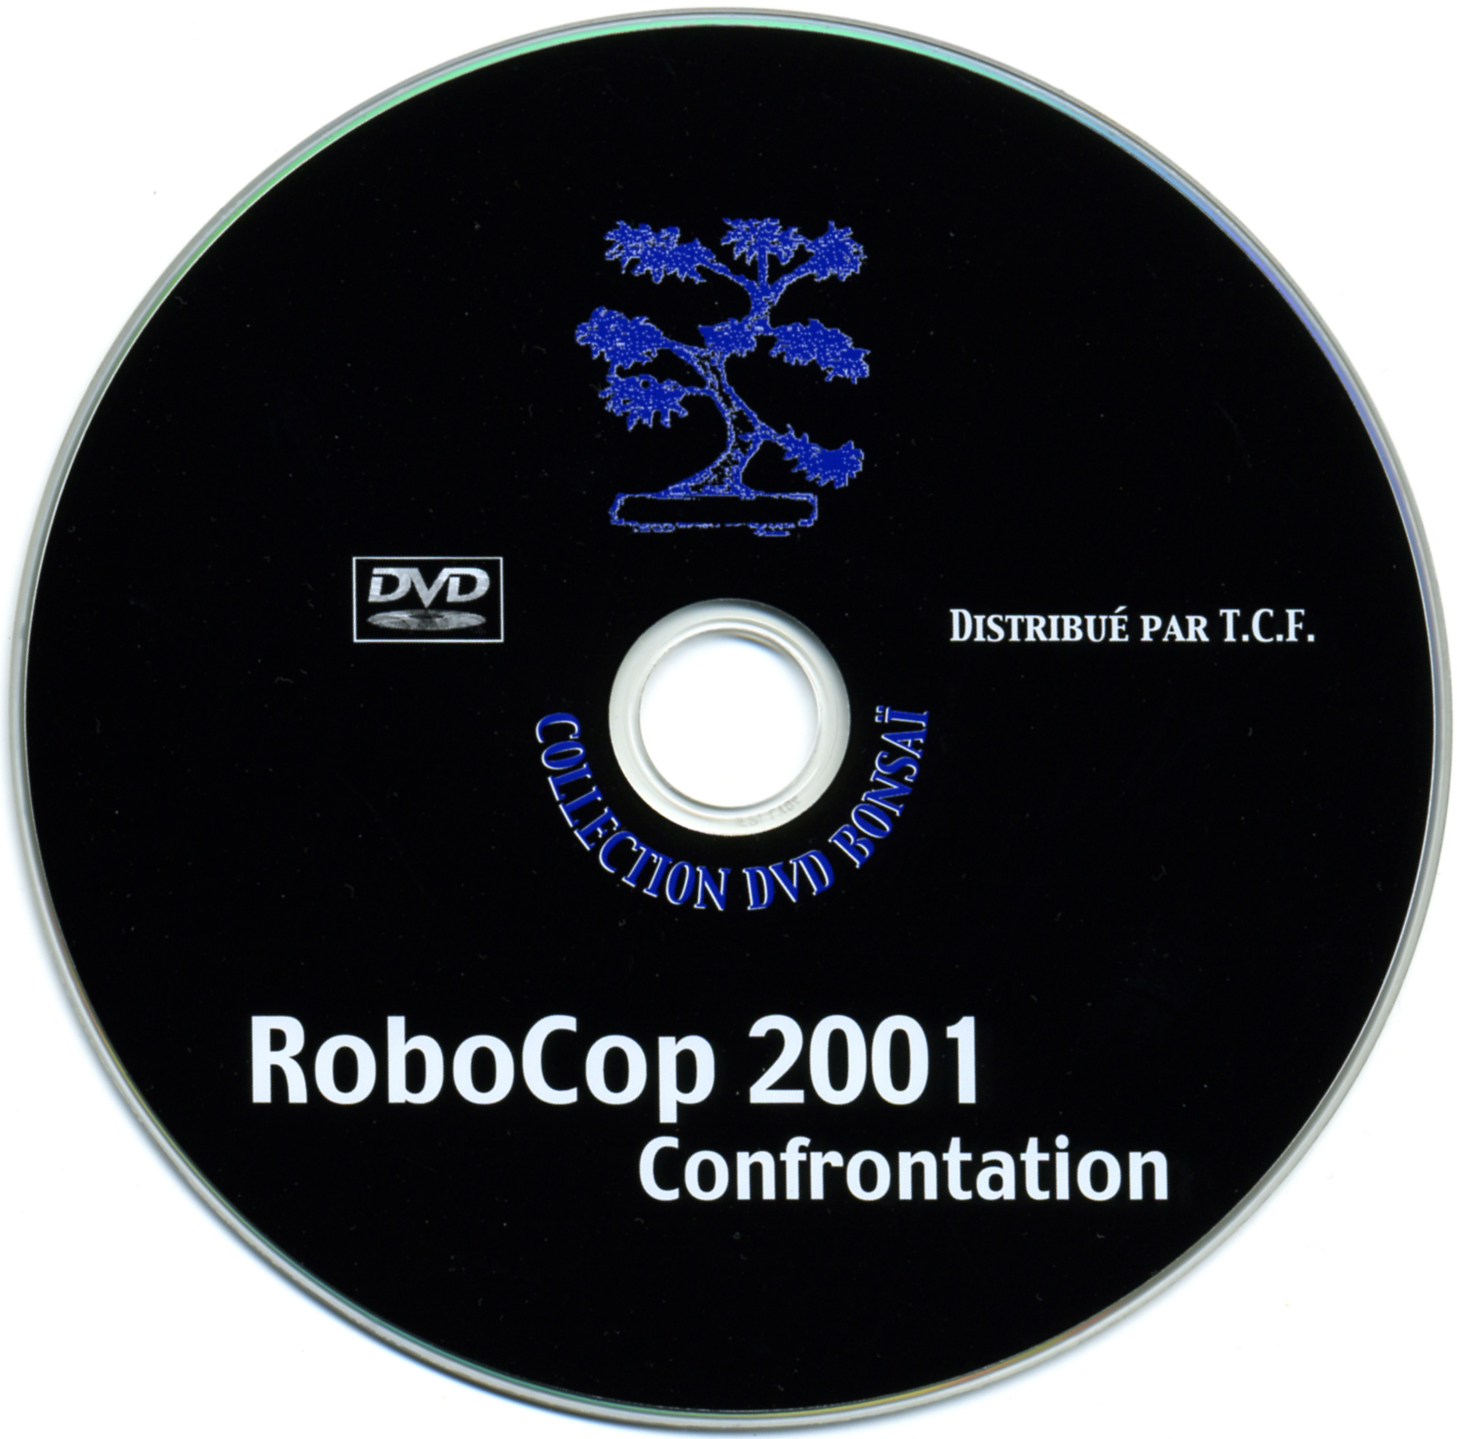 Robocop 2001 - Confrontation